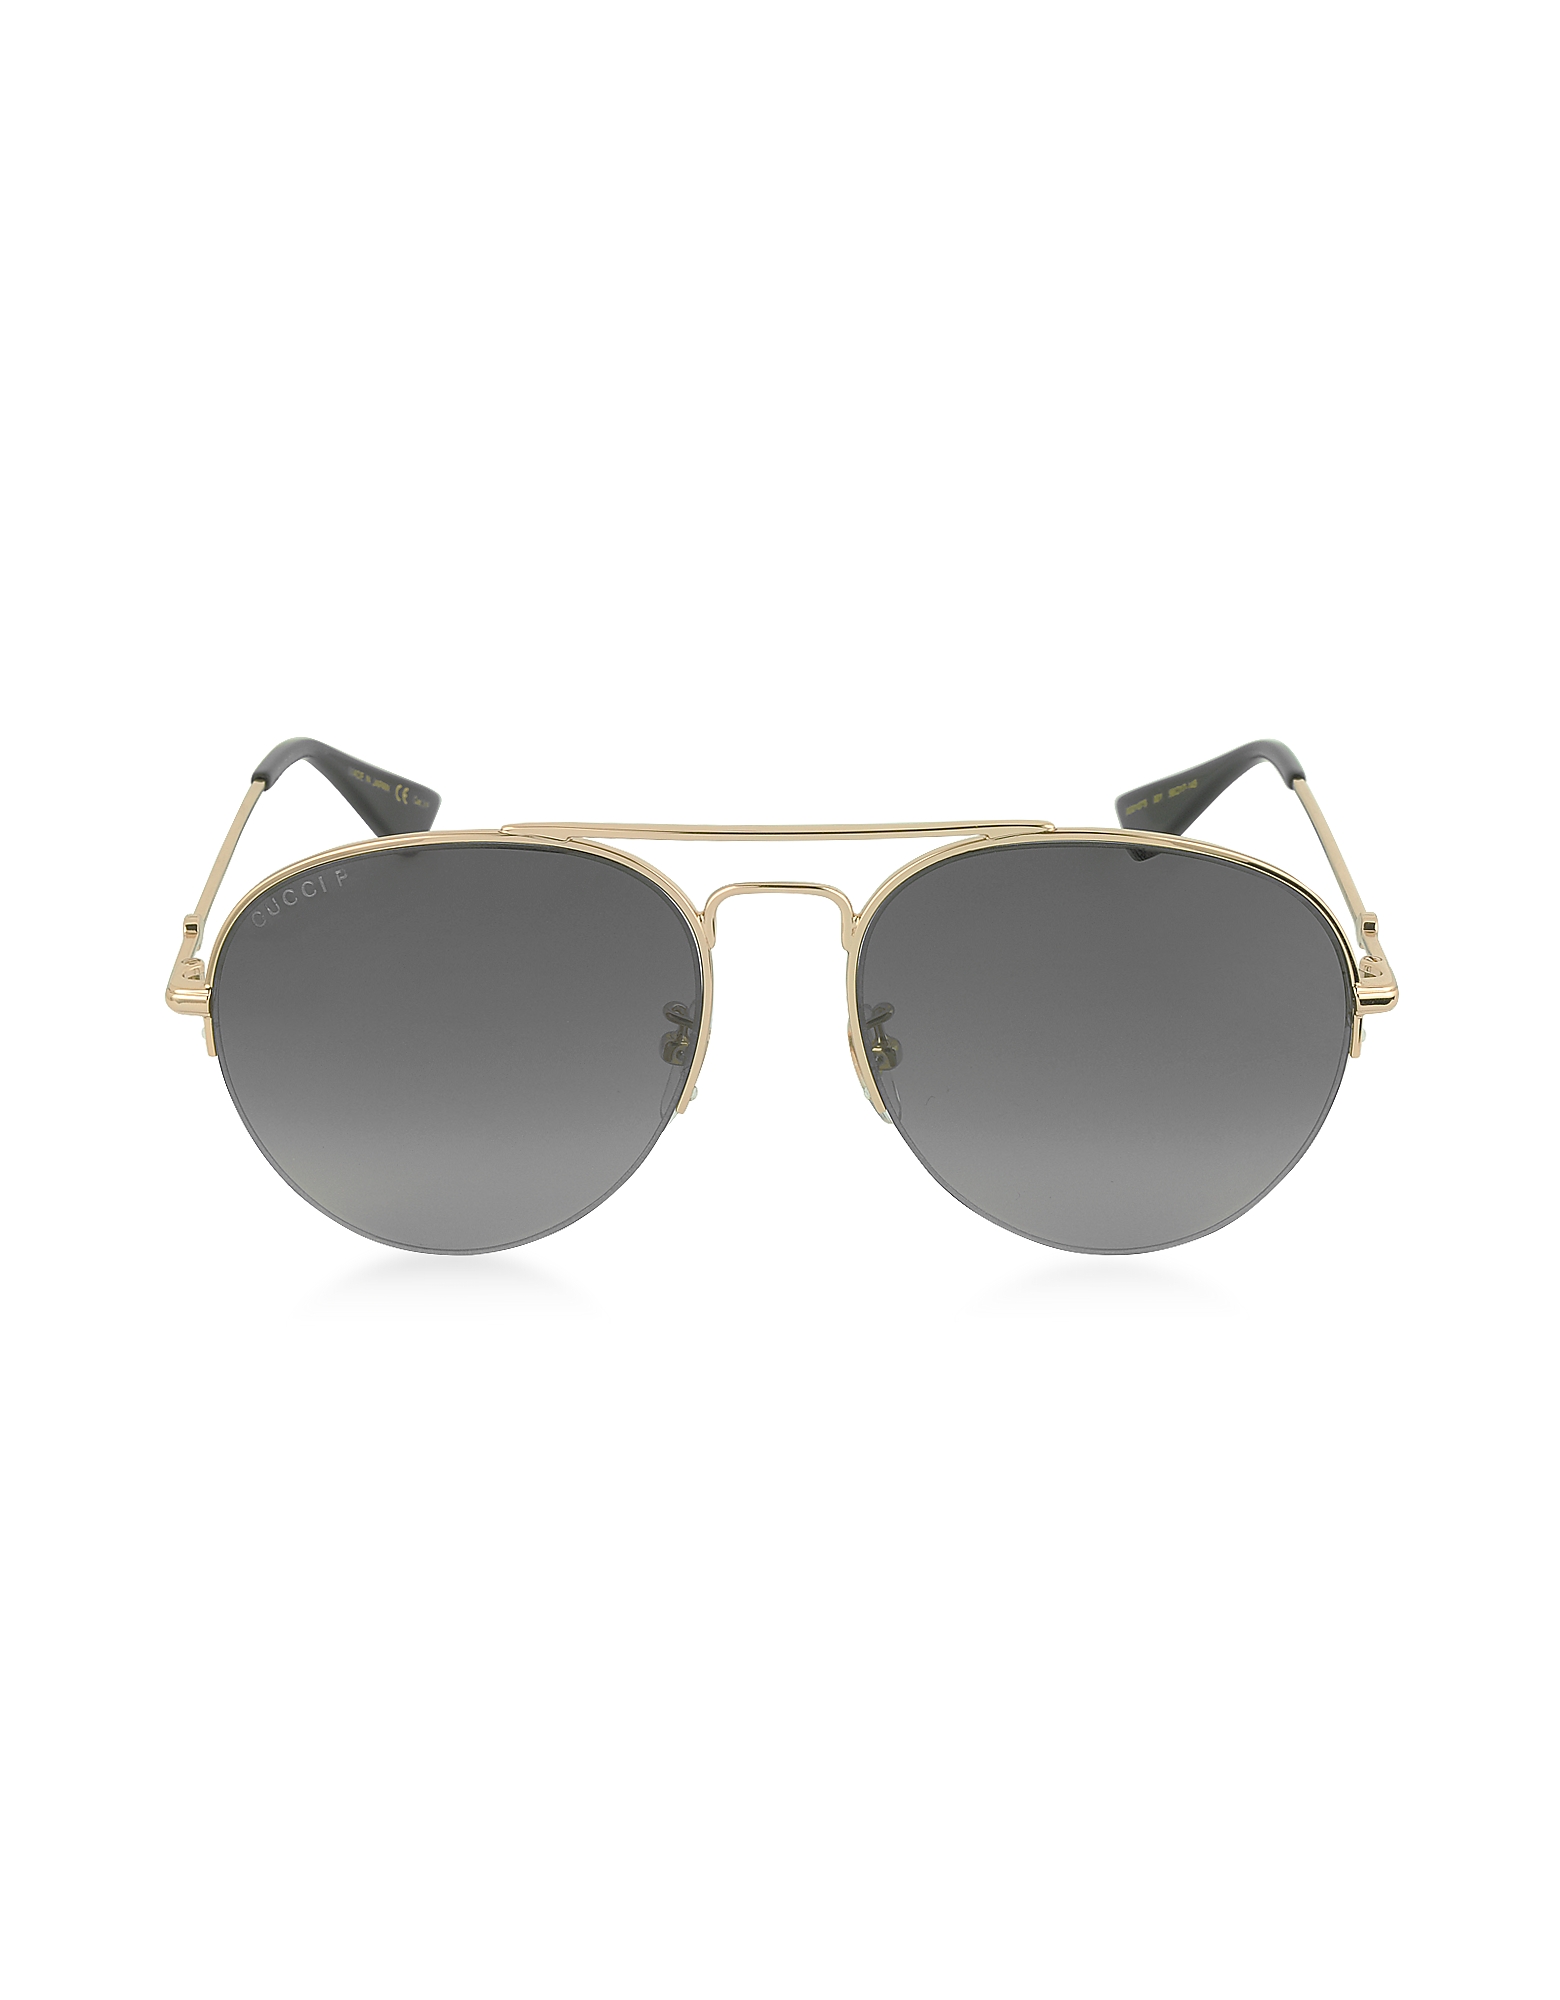 Gucci GG0107S 001 Gold Metal Aviator Men's Polarized Sunglasses